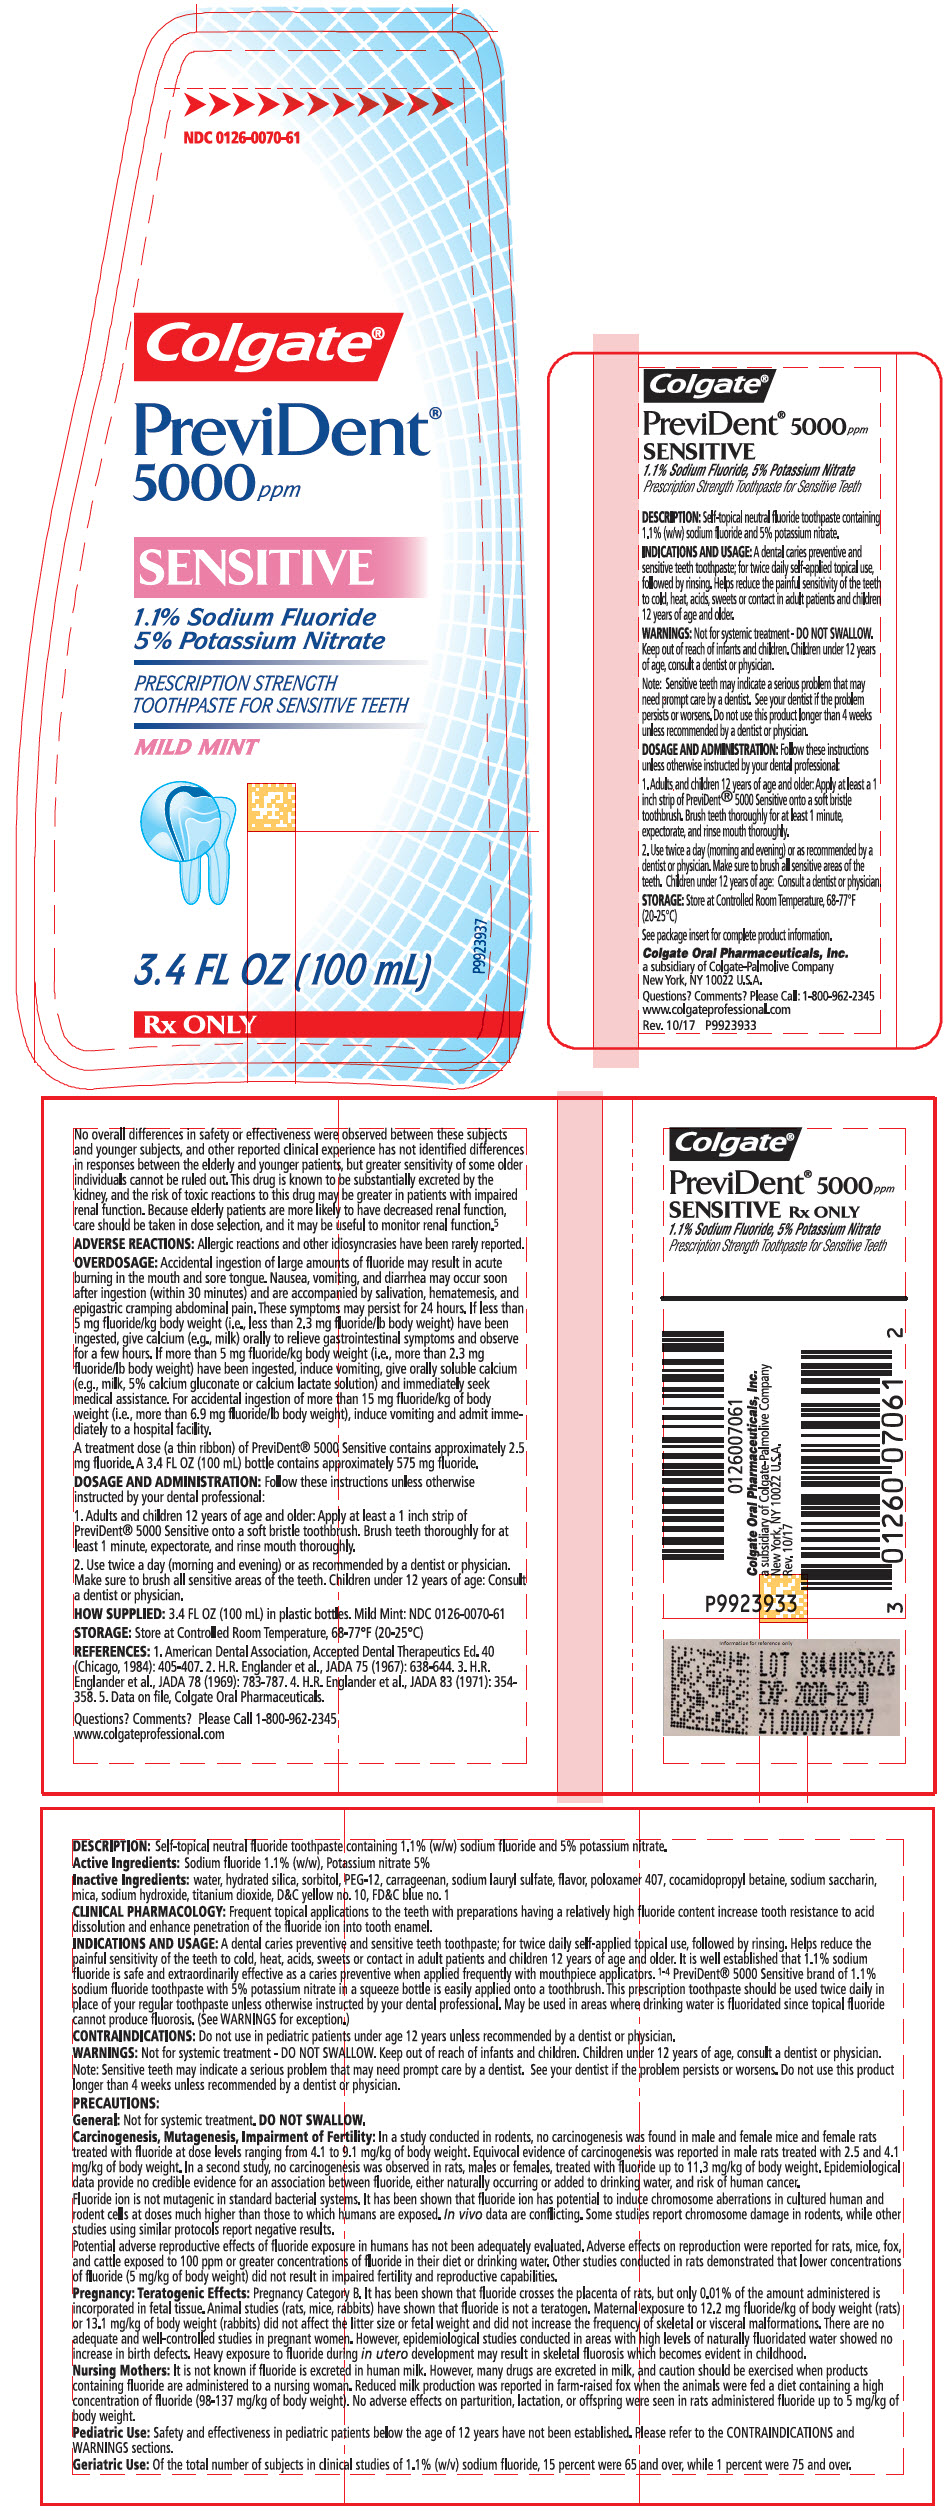 PRINCIPAL DISPLAY PANEL - 100 mL Bottle Label